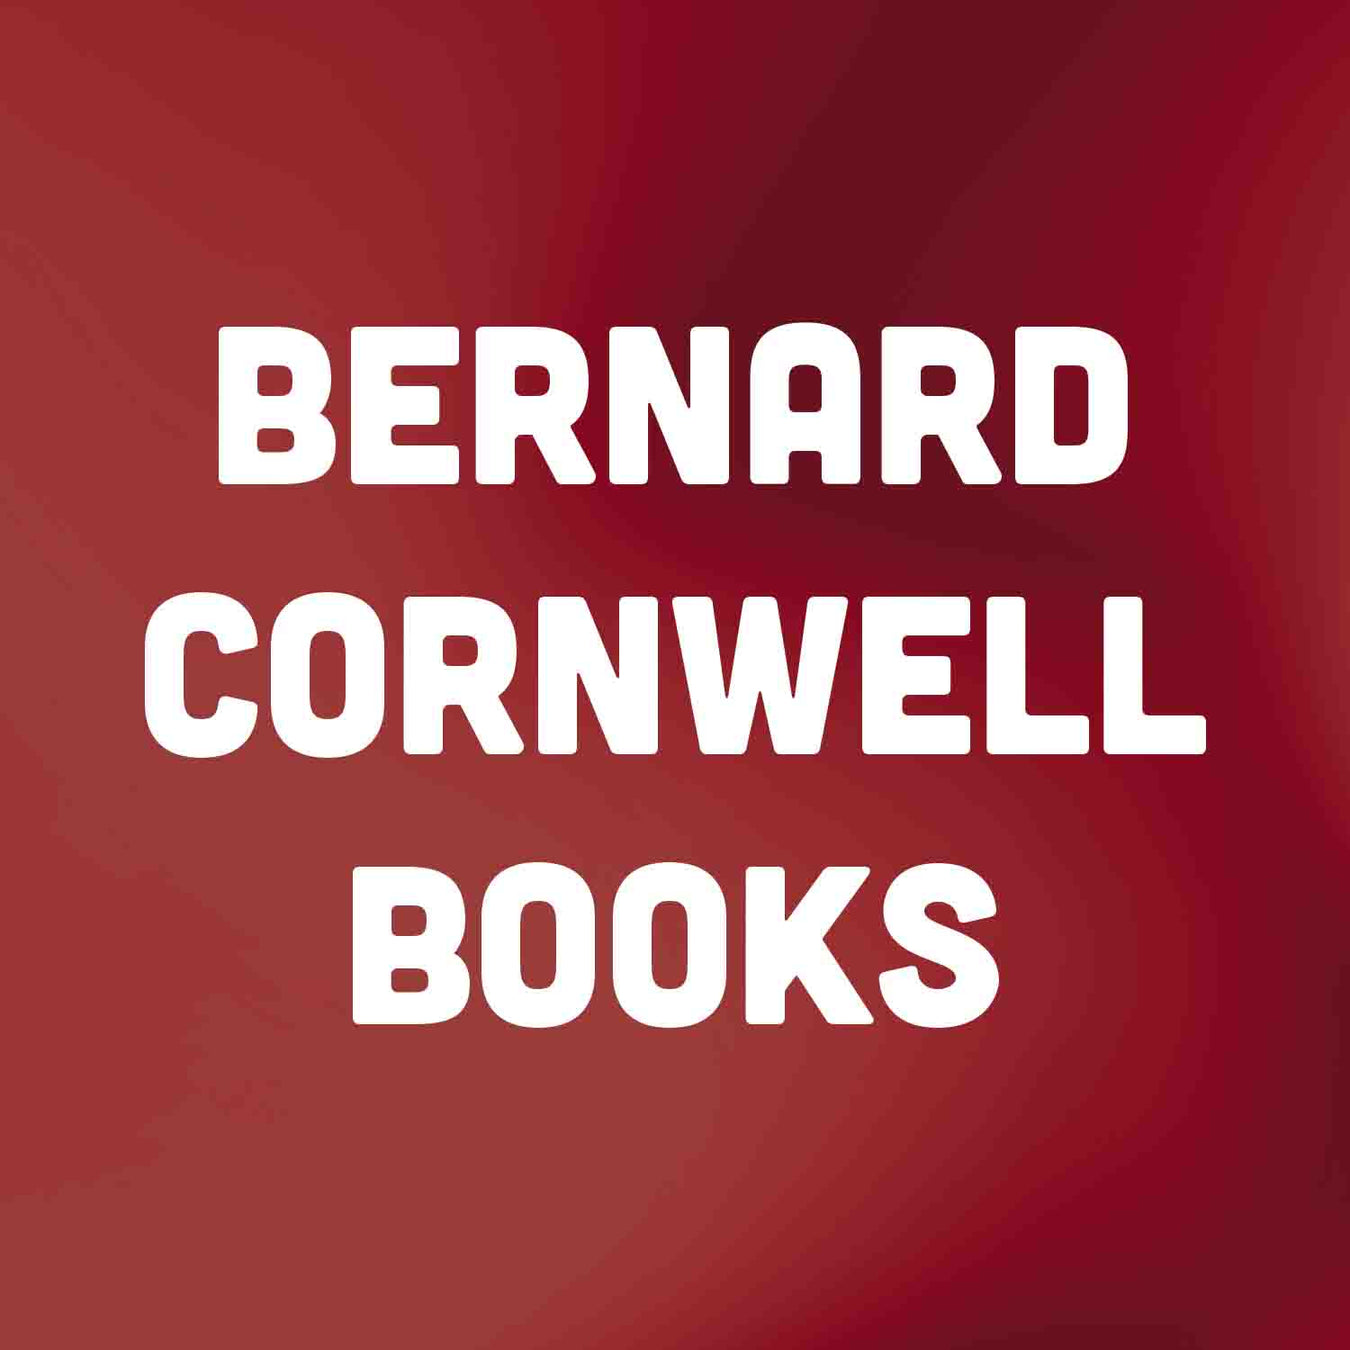 Bernard Cornwell Books